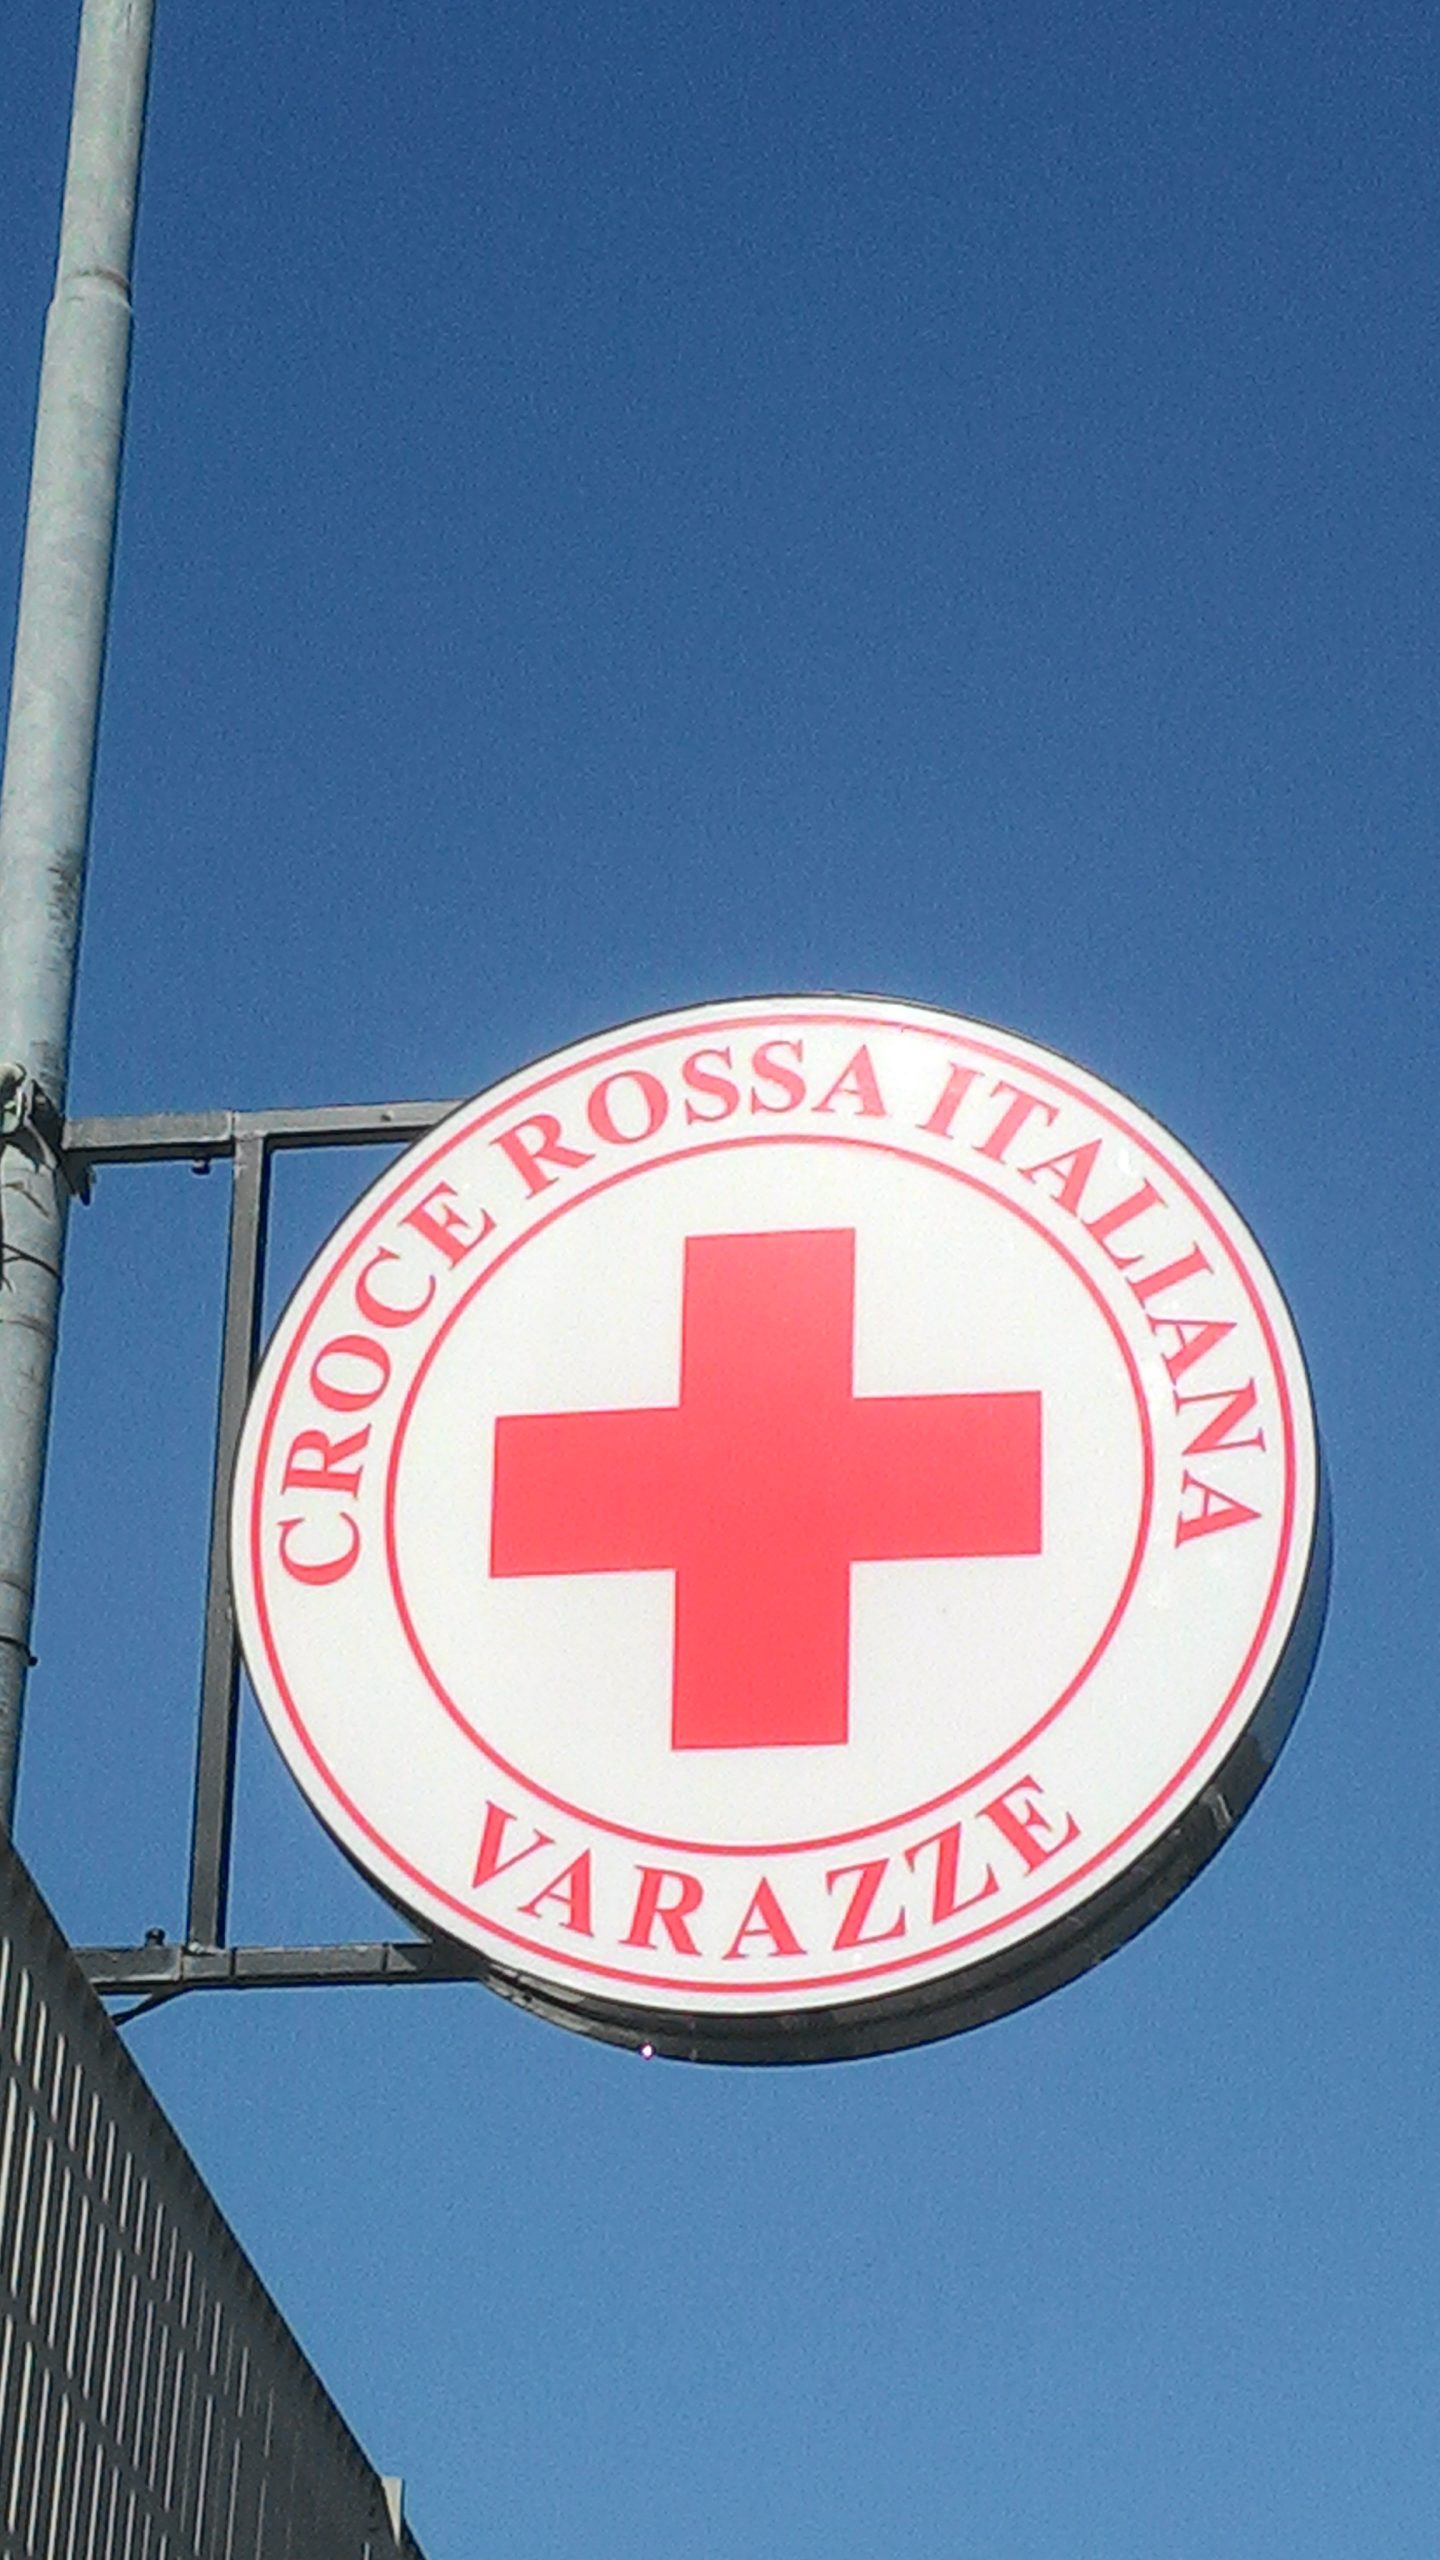 Croce rossa Varazze